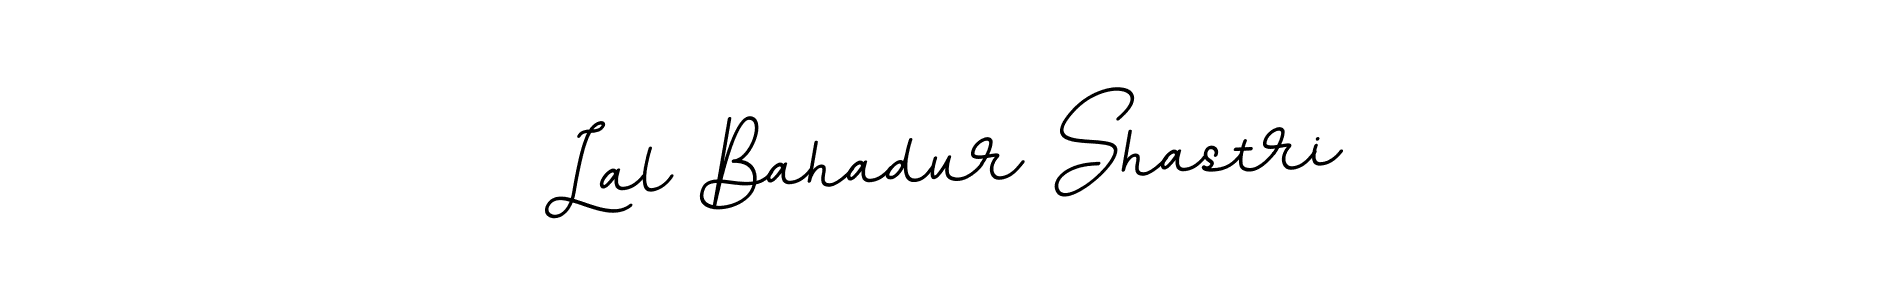 How to Draw Lal Bahadur Shastri signature style? BallpointsItalic-DORy9 is a latest design signature styles for name Lal Bahadur Shastri. Lal Bahadur Shastri signature style 11 images and pictures png